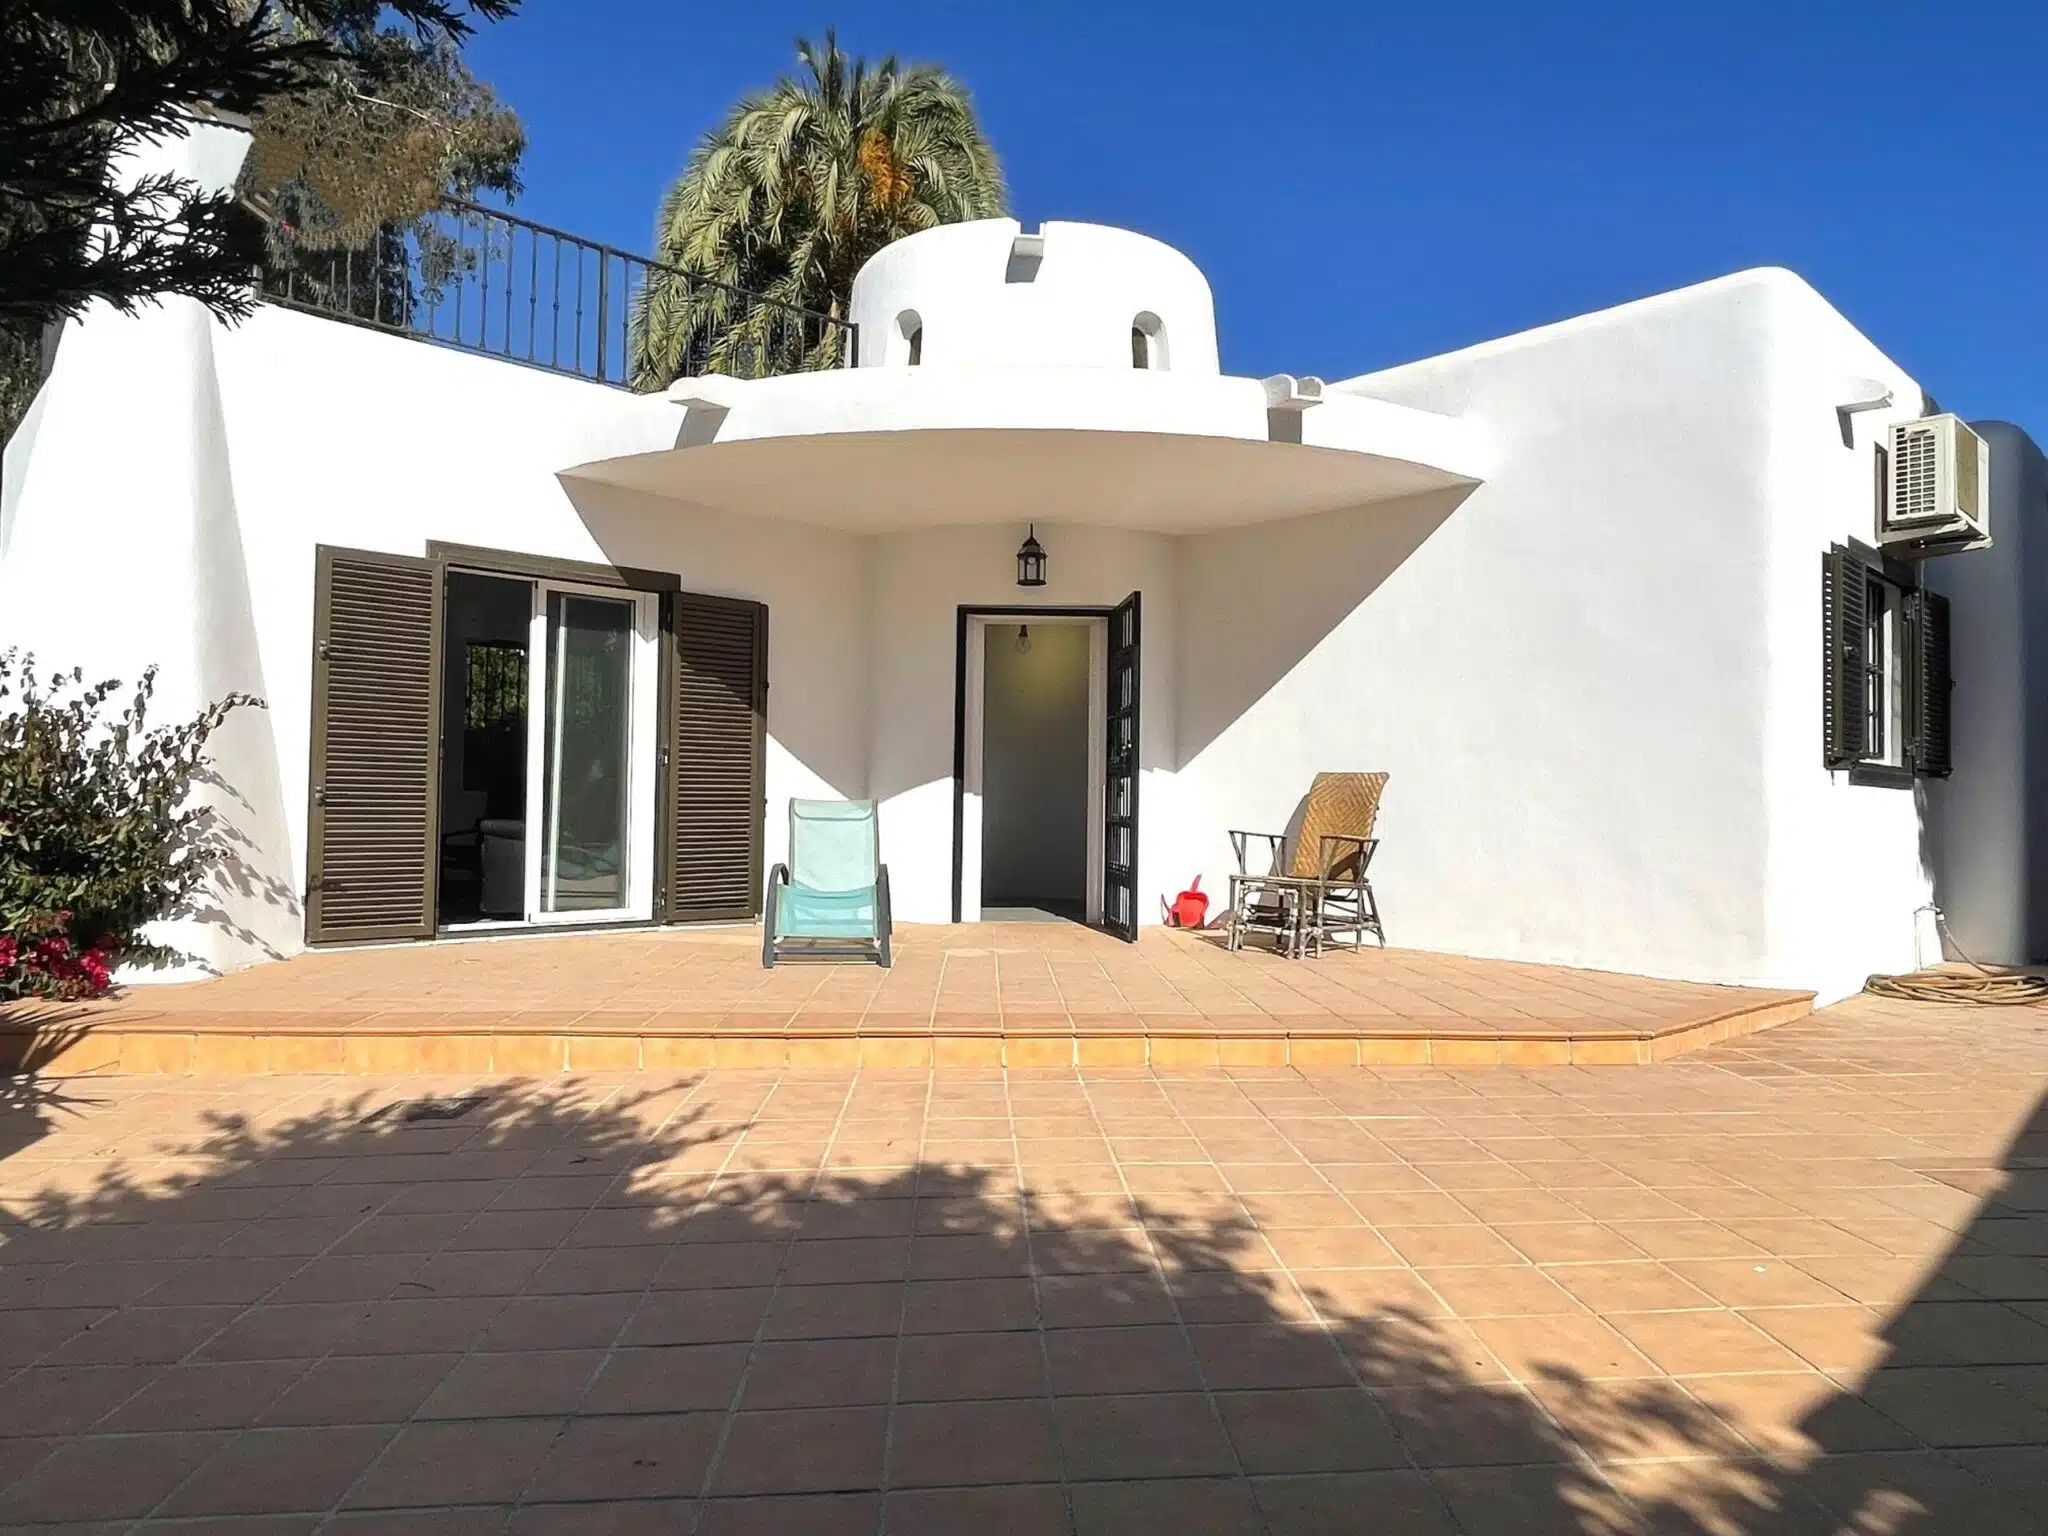 Resale Villa Te koop in Villaricos in Spanje, gelegen aan de Costa de Almería